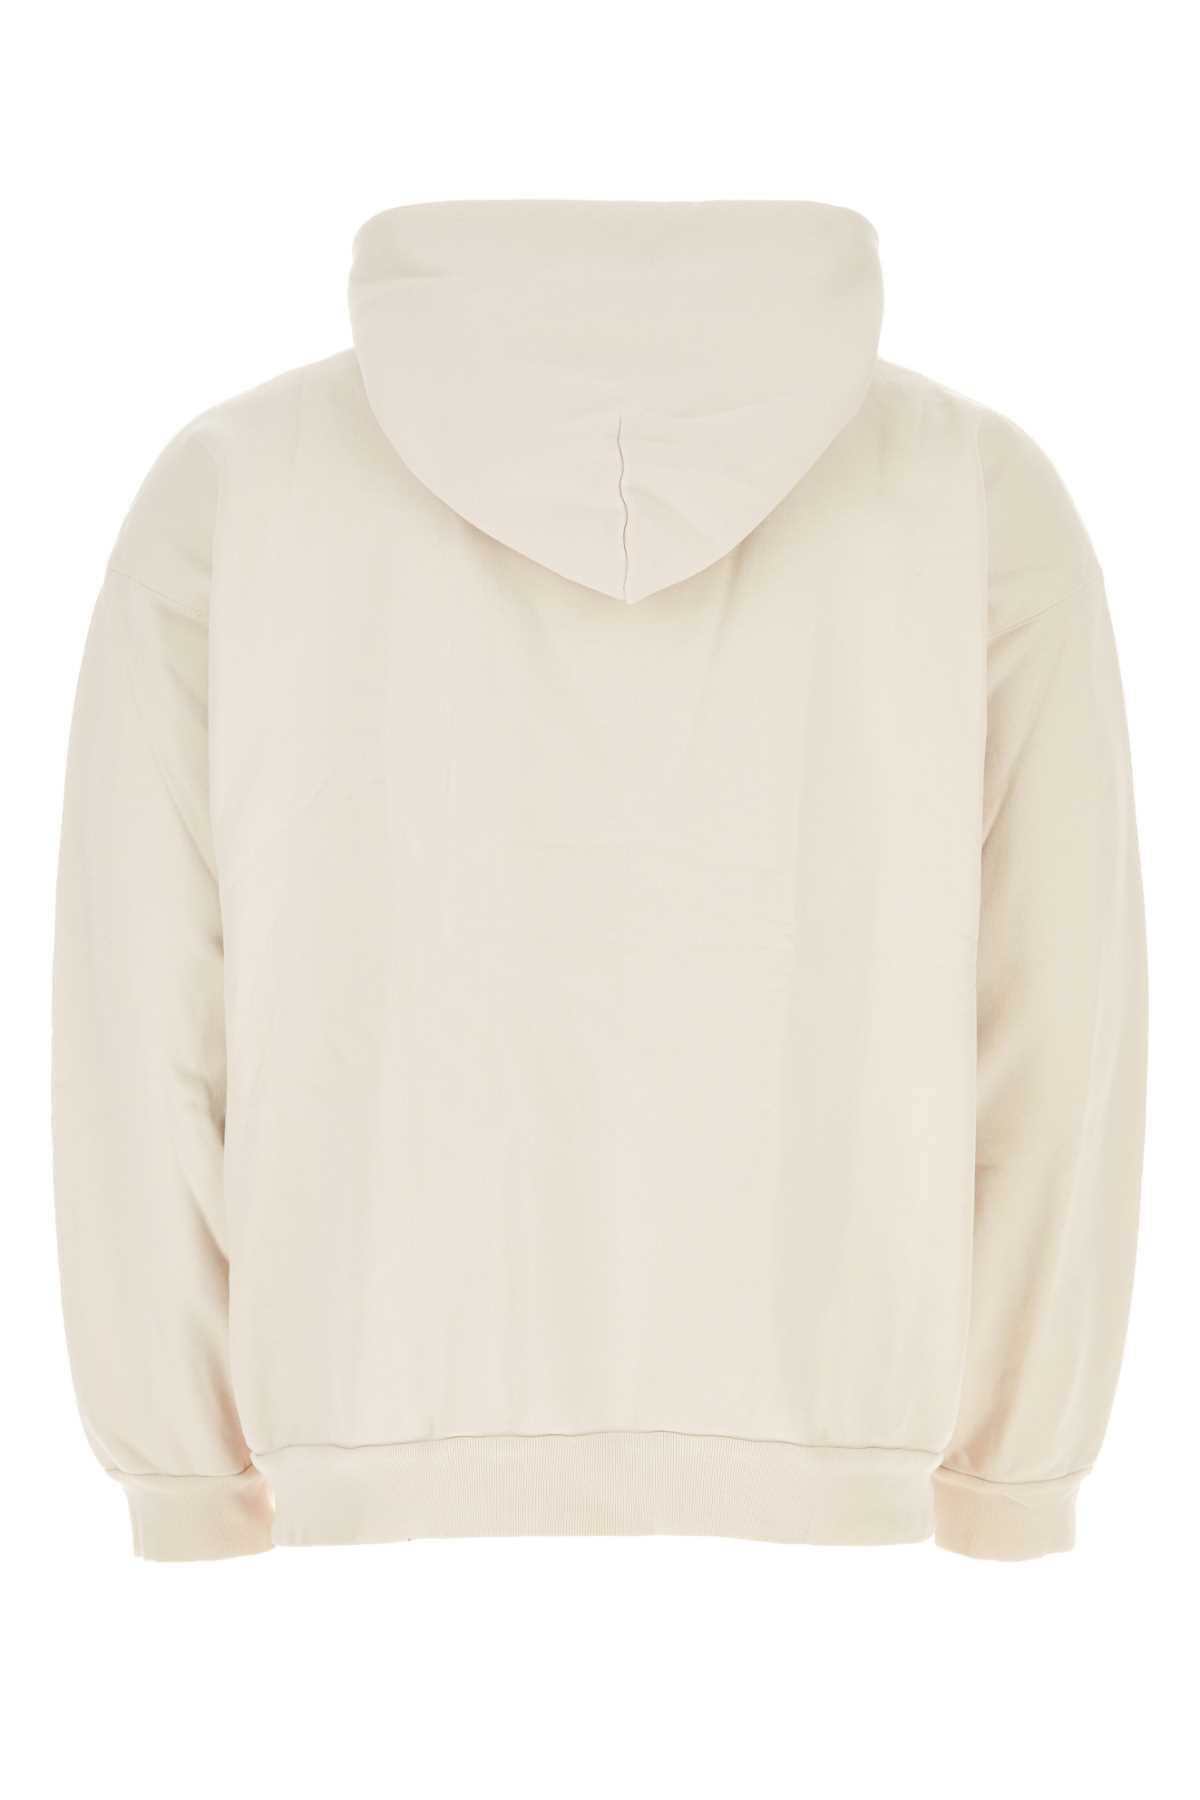 Balenciaga Ivory Cotton Sweatshirt In Ecrublack